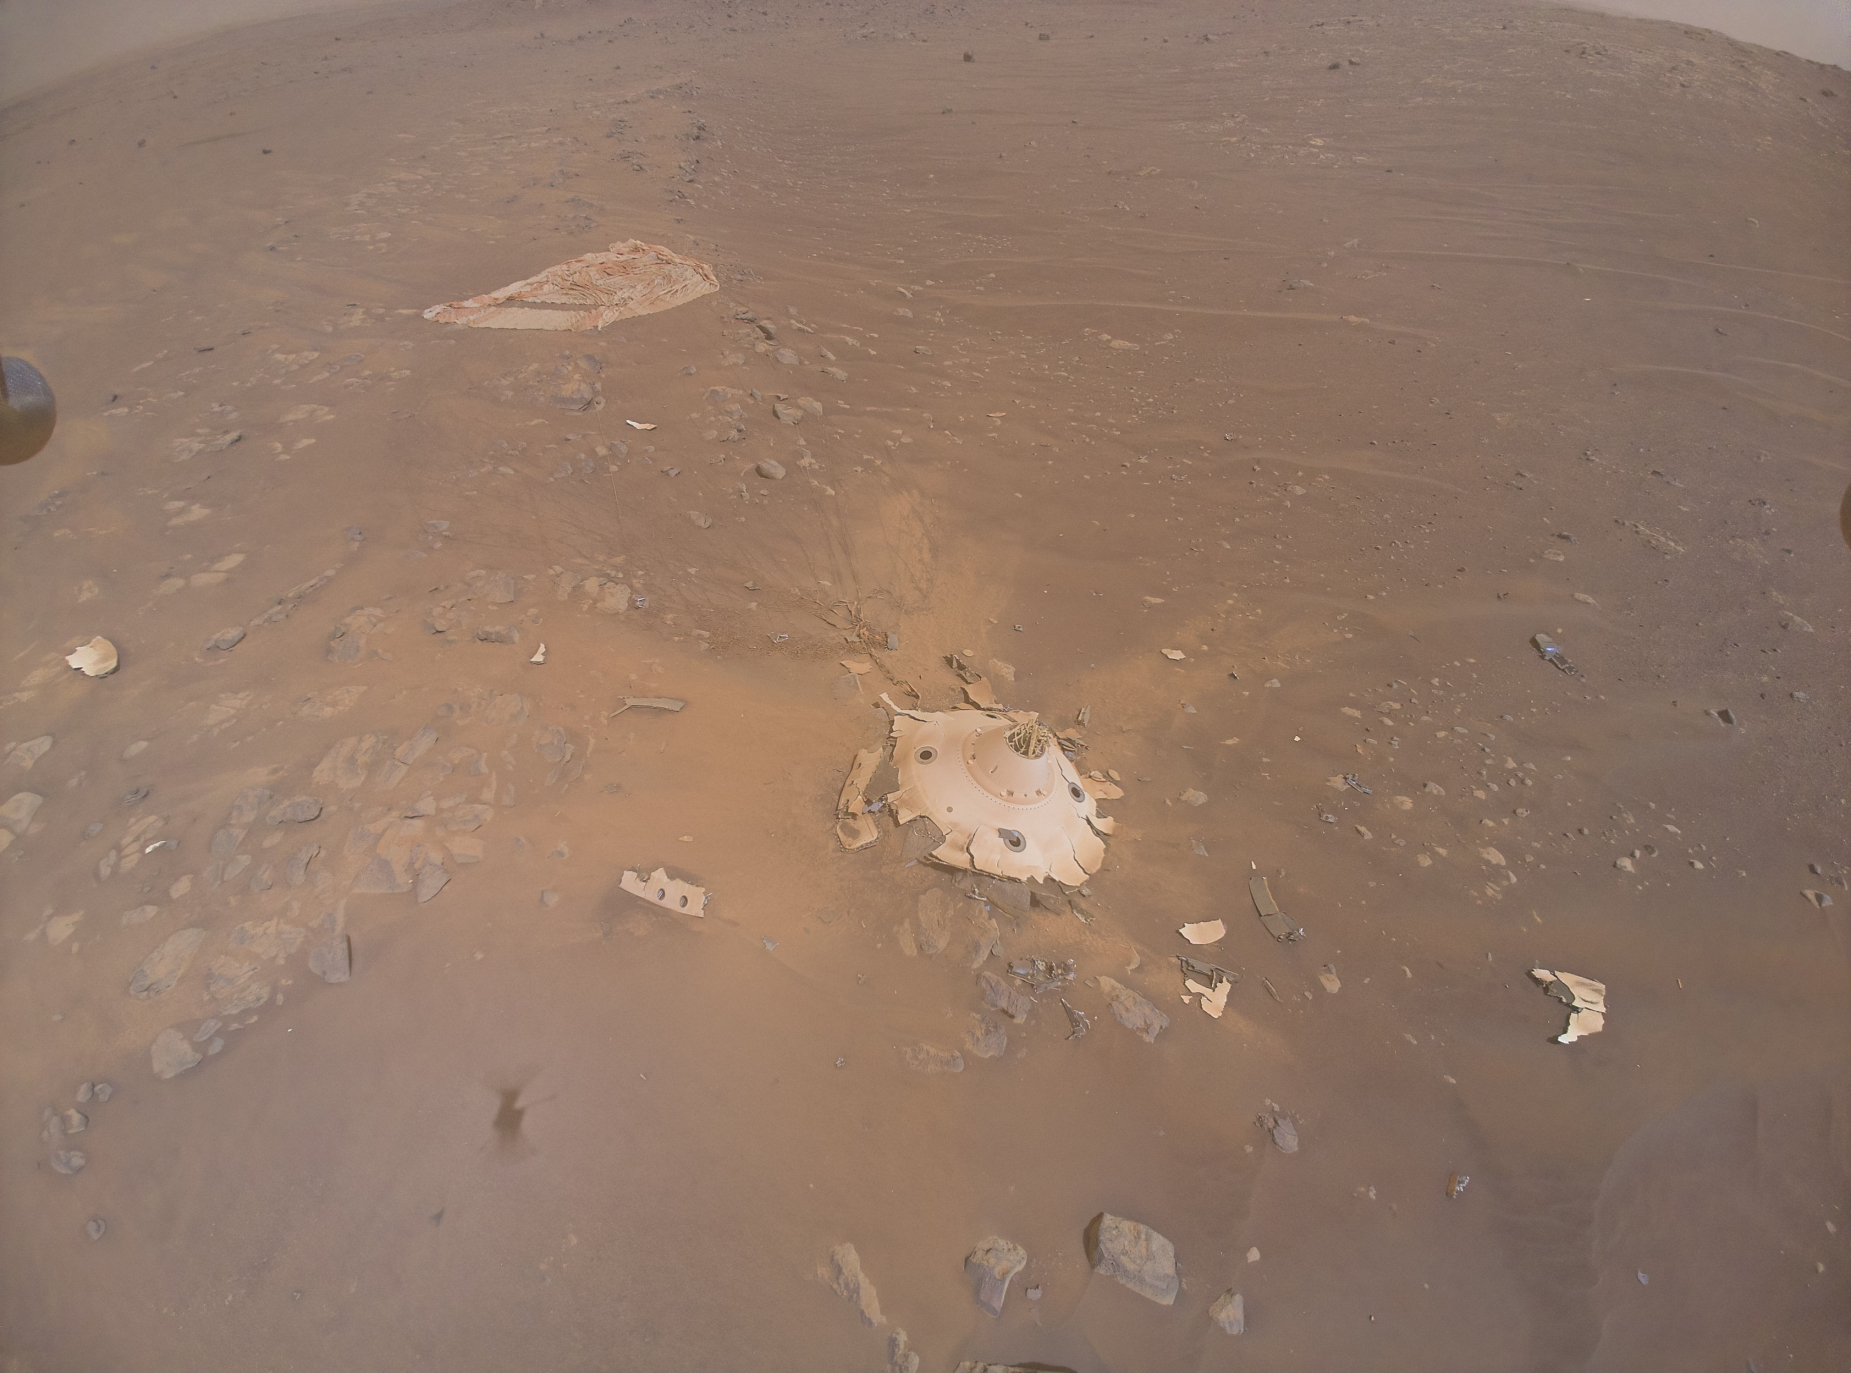 Krhotine i ostatci padobrana i stražnje školjke letjelice koja je spustila NASA-in rover 'Perseverance' na površini Marsa 19. travnja 2021. godine (©NASA-JPL/Caltech).